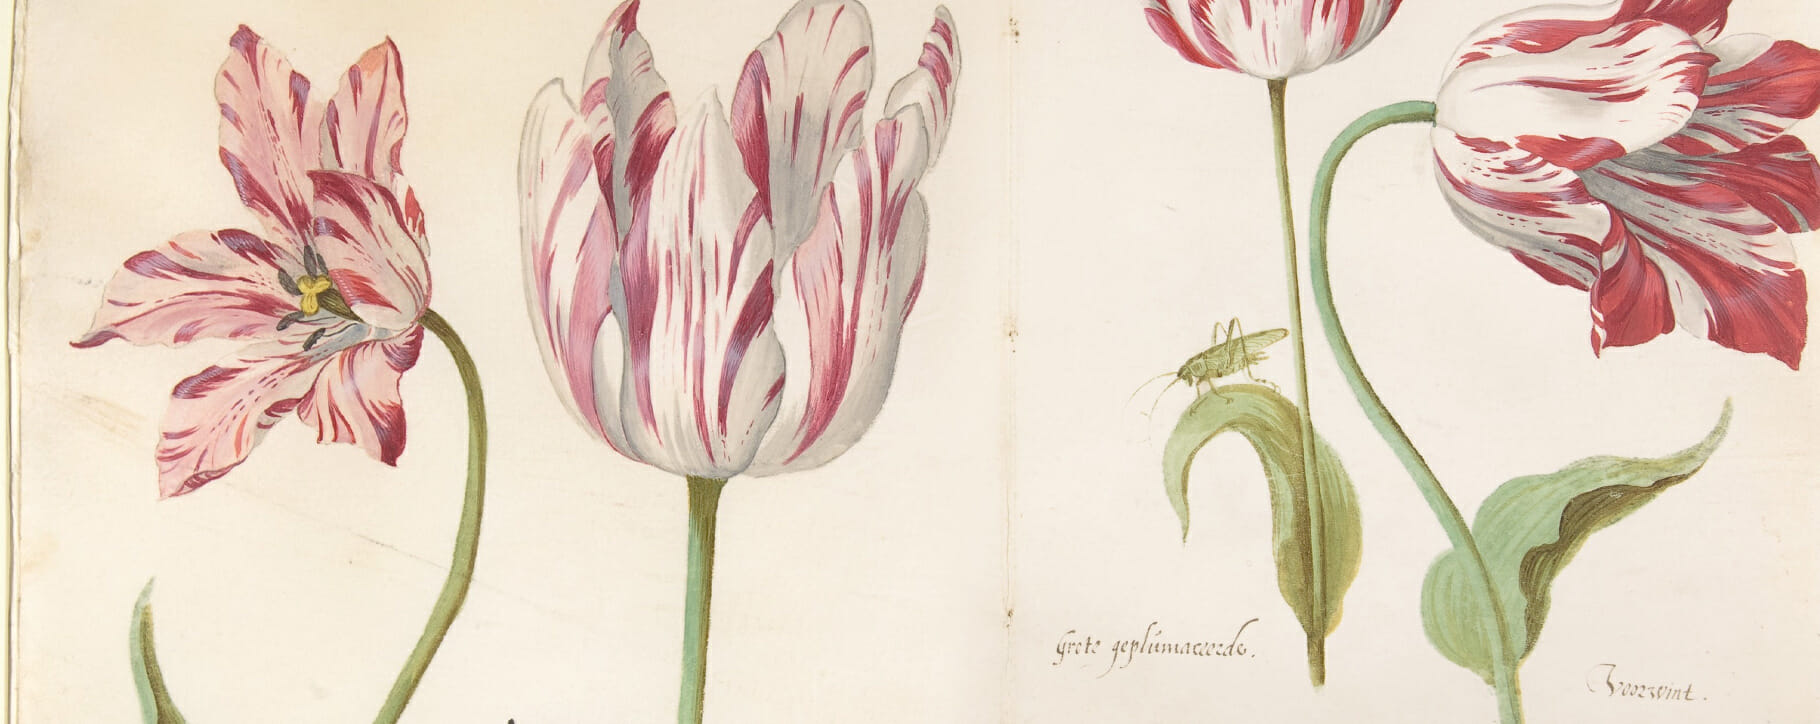 17th century tulip illustration